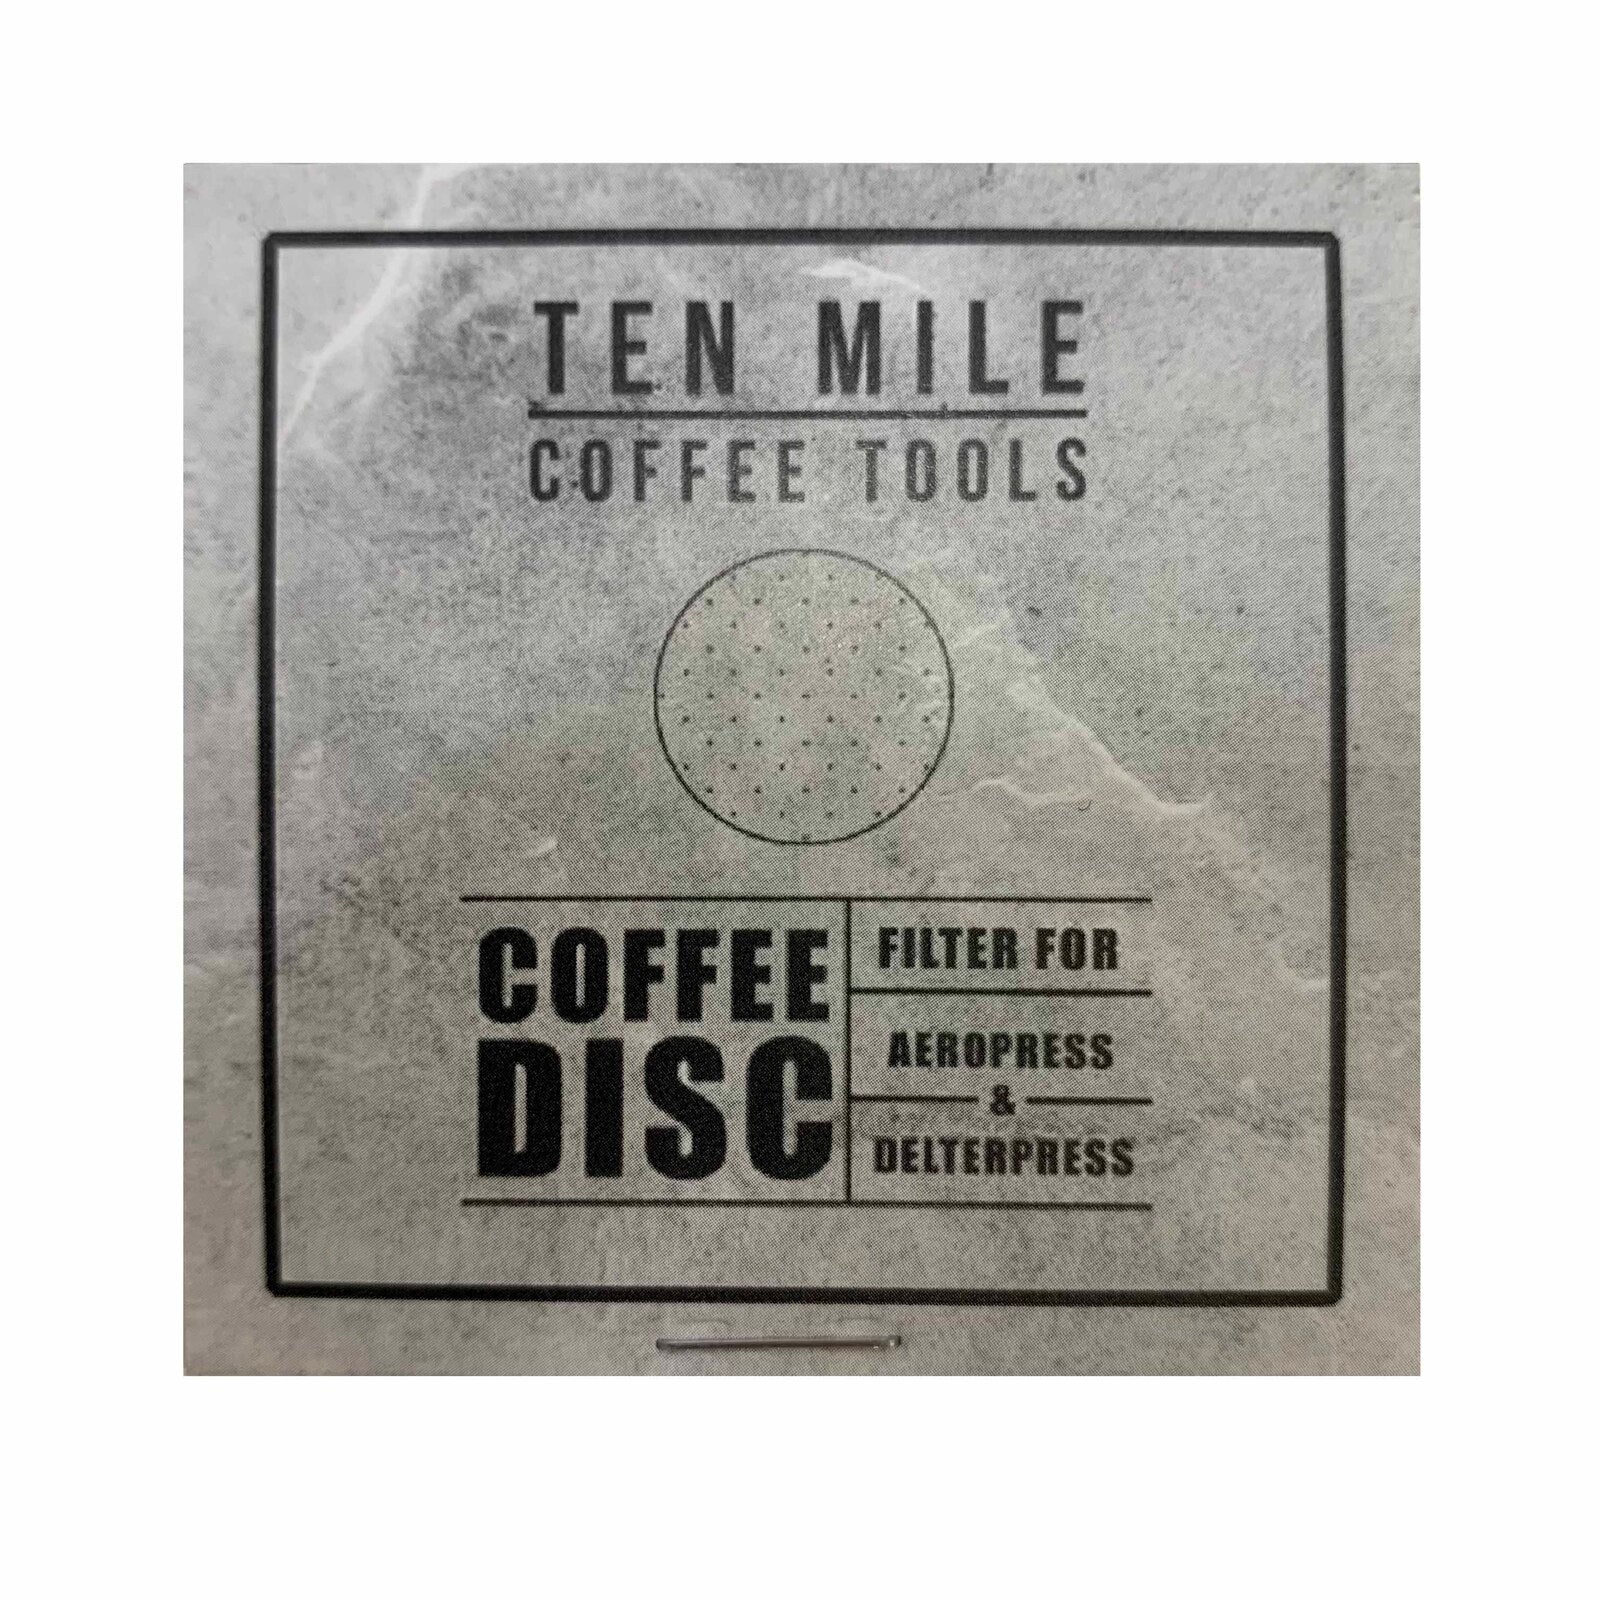 Ten Mile Coffee Tools Coffee Disc Filter